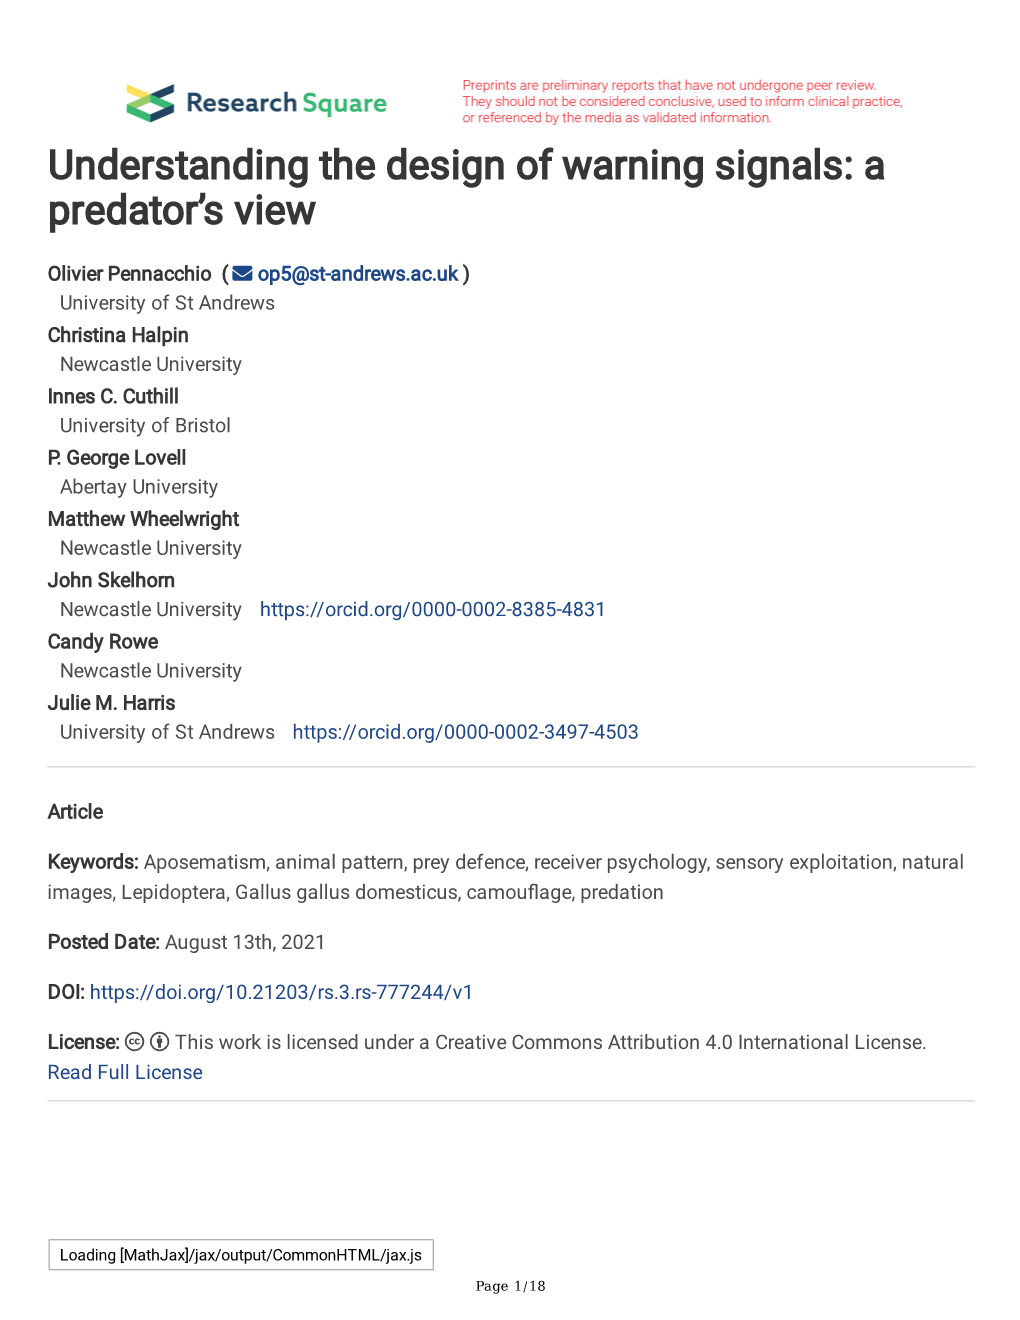 Understanding the Design of Warning Signals: a Predator's View